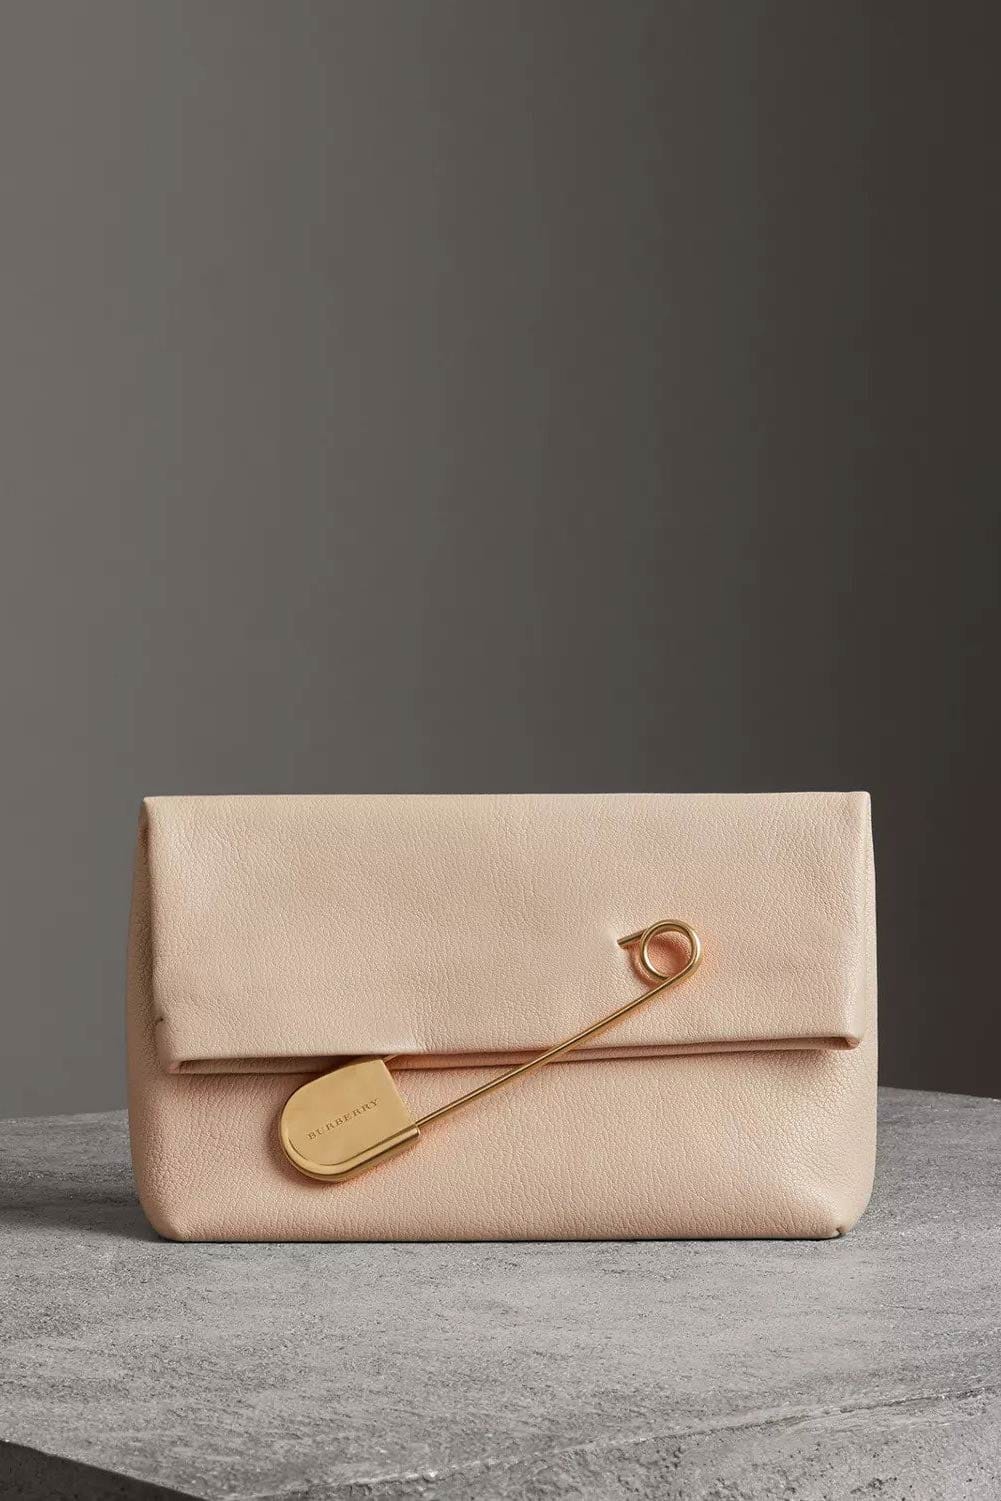 Big Buddha Black Envelope Tassle Clutch Purse Handbag | eBay